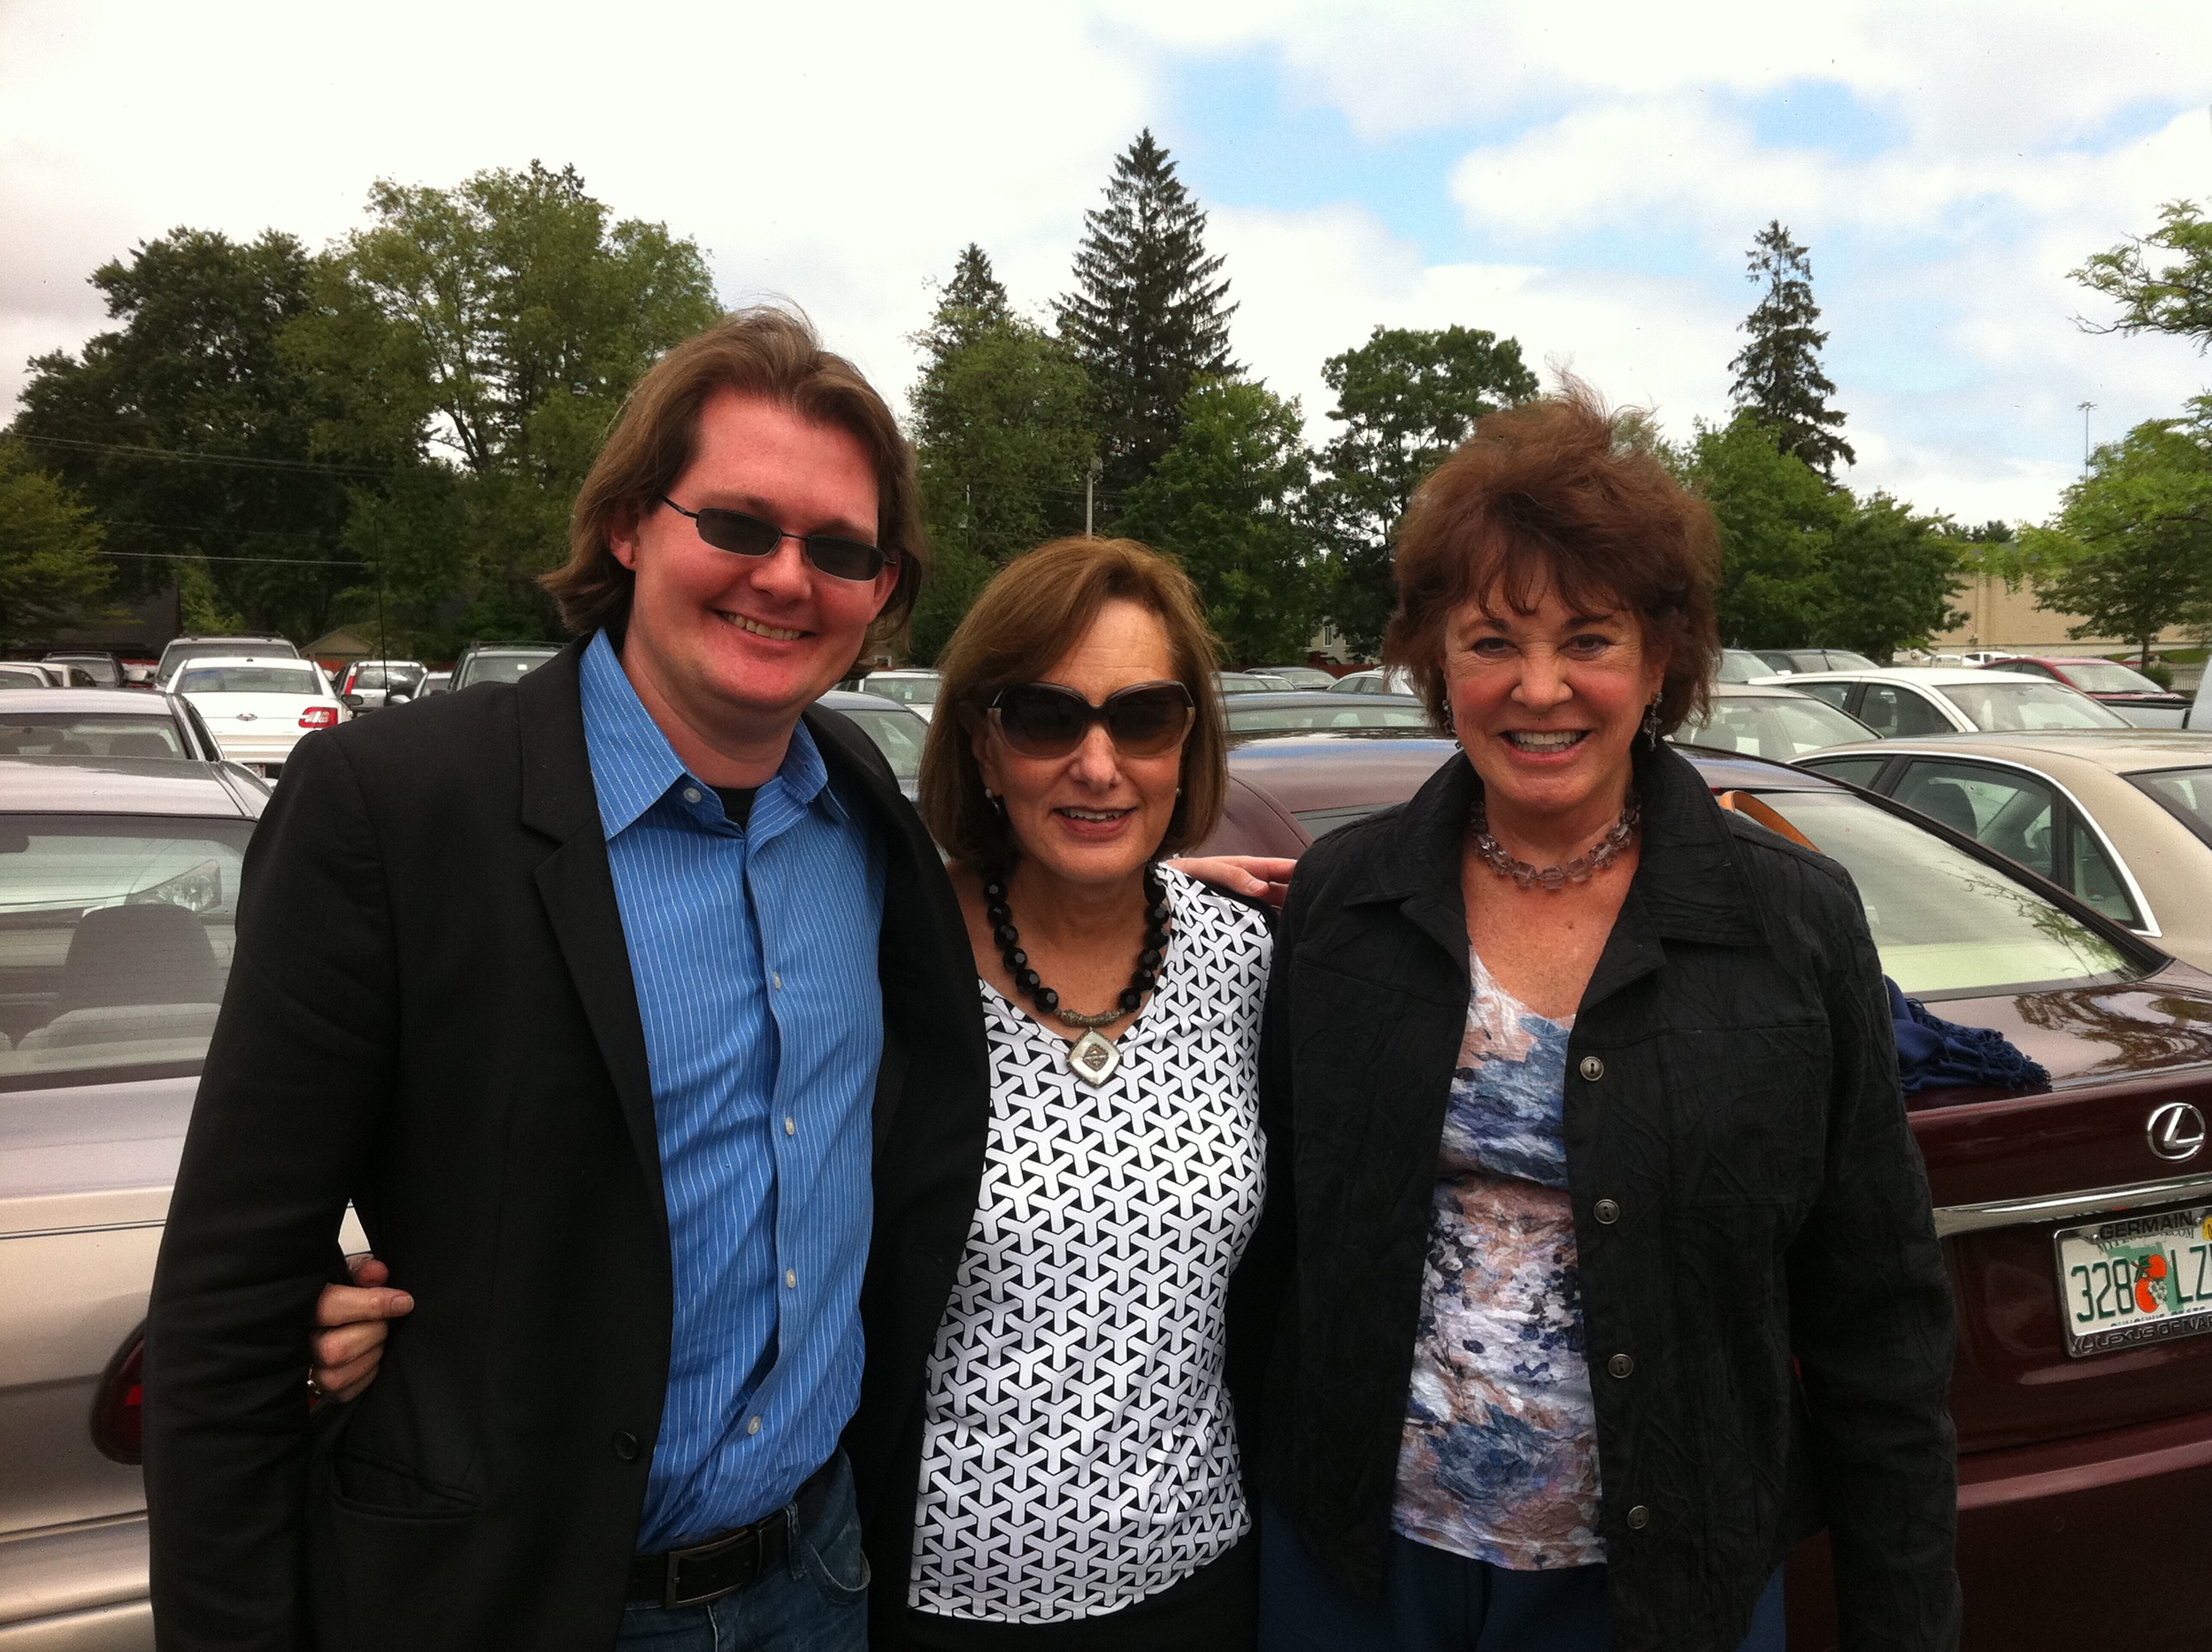 Robert, Joan, Marty in Sturbridge - June 2011